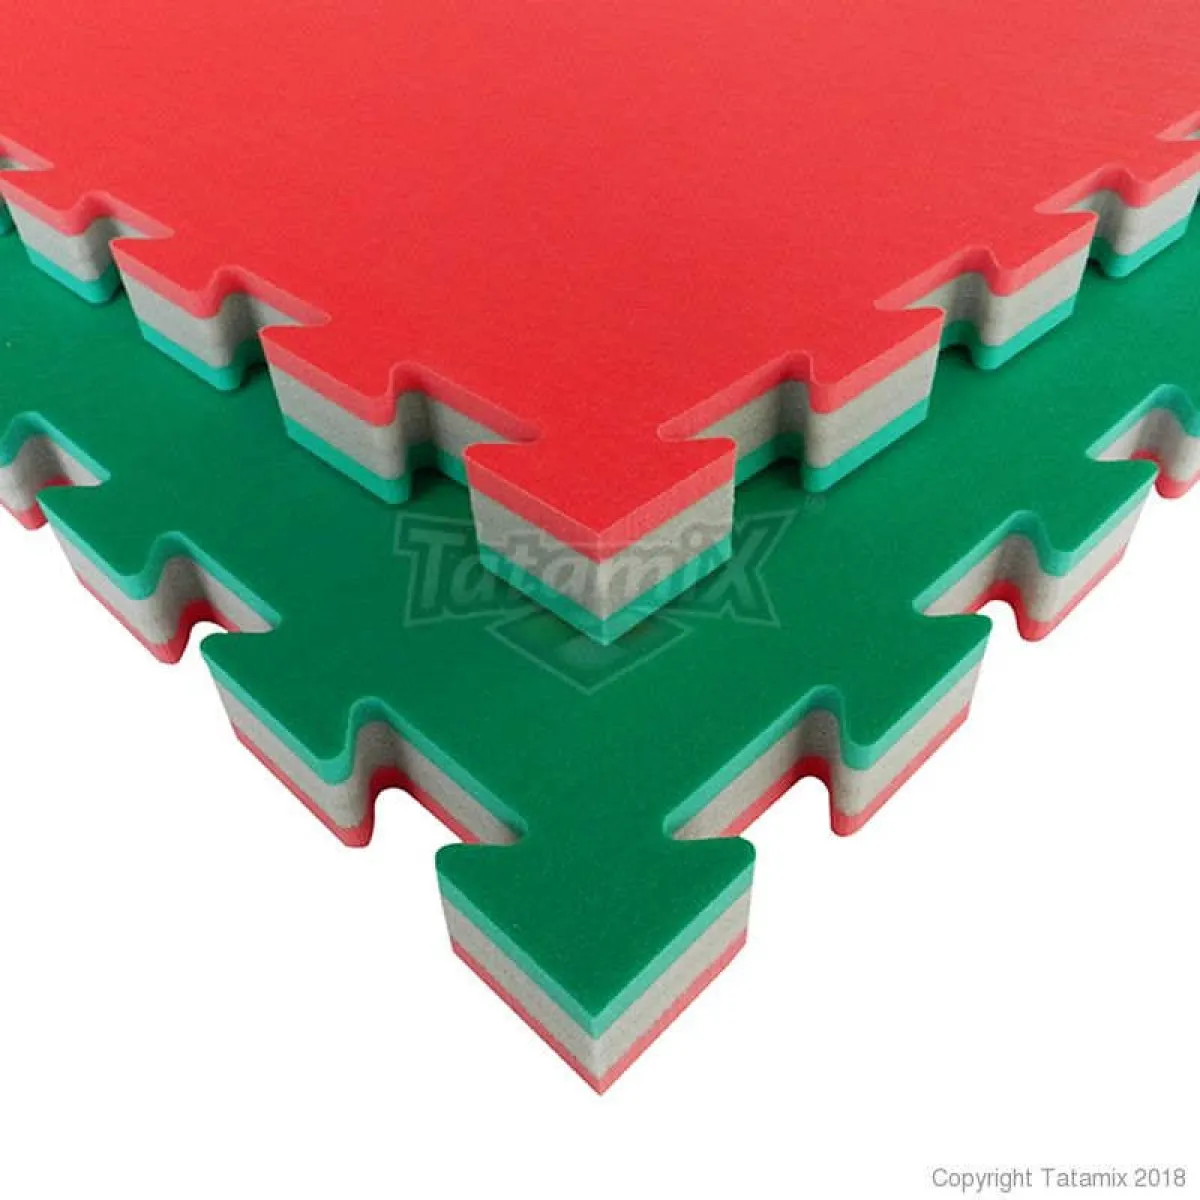 Tatami J40D mat red/grey/green 100 cm x 100 cm x 4 cm